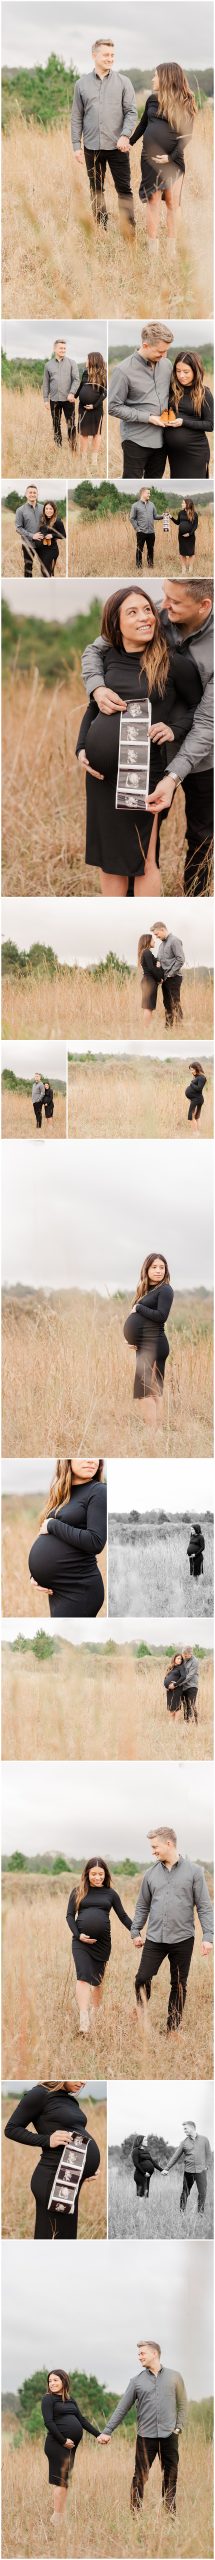 maternity photography session fairhope alabama jennie tewell 0001